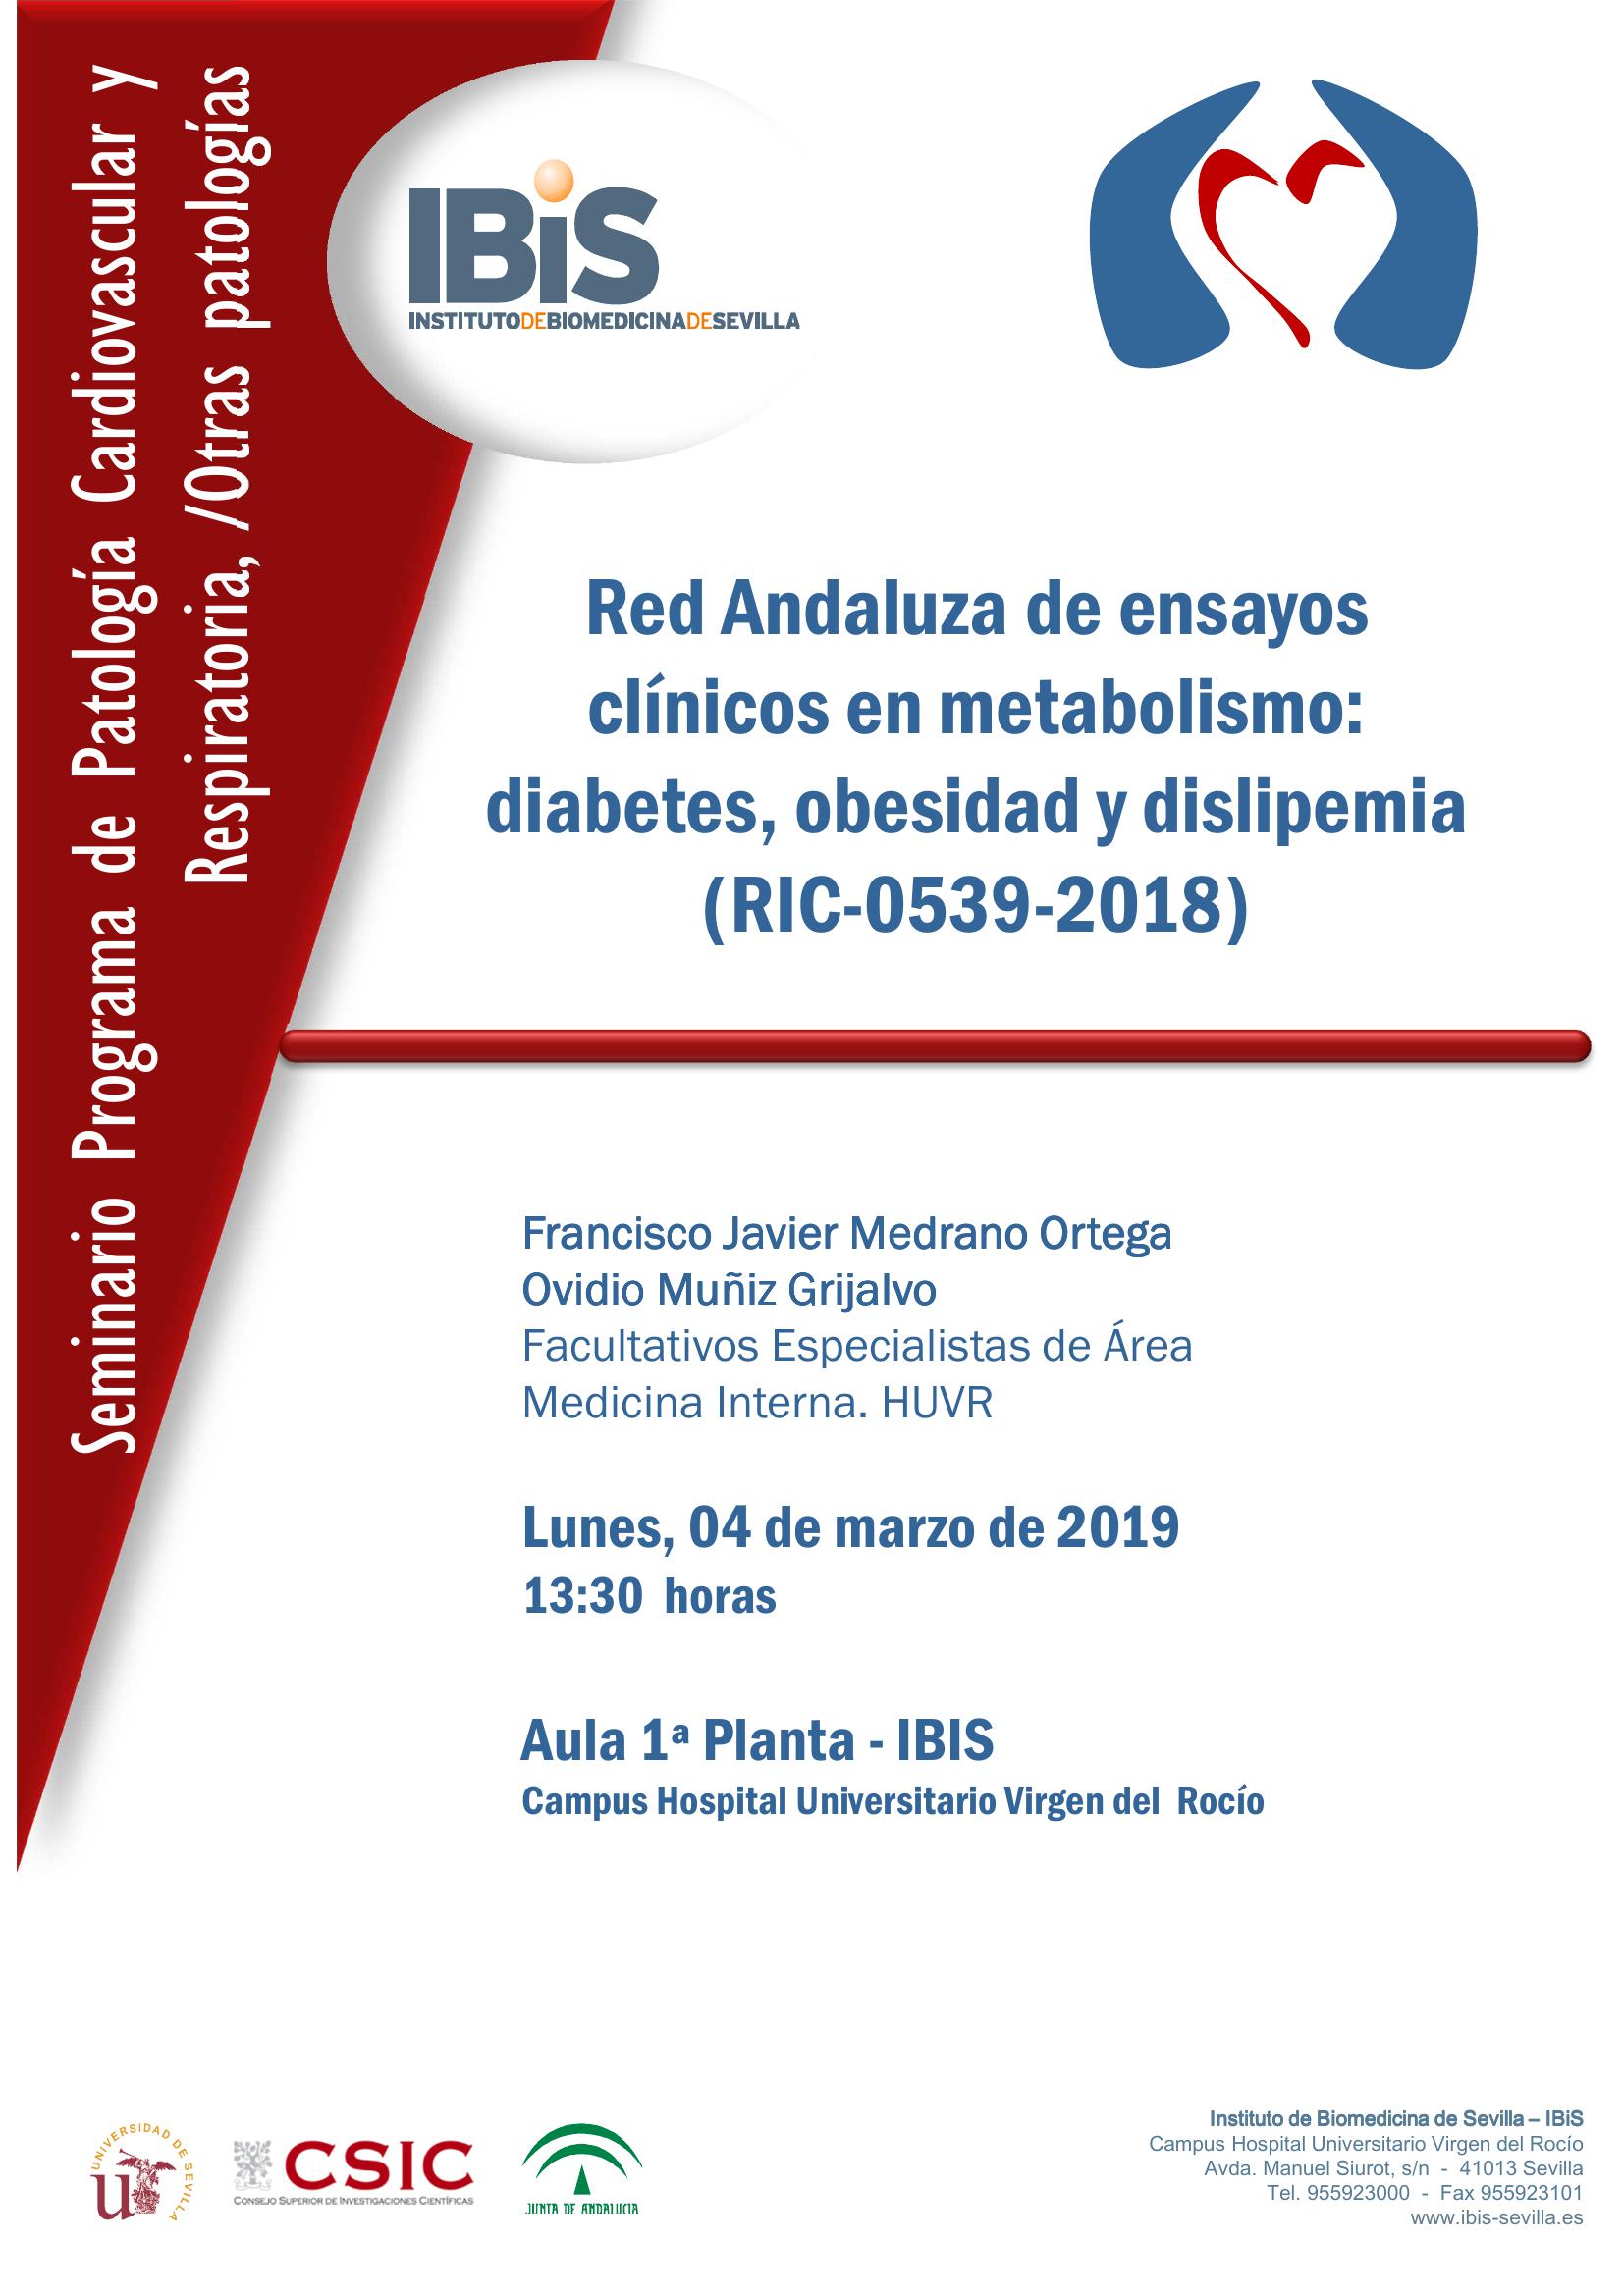 Poster: Red Andaluza de ensayos clínicos en metabolismo: diabetes, obesidad y dislipemia (RIC-0539-2018)